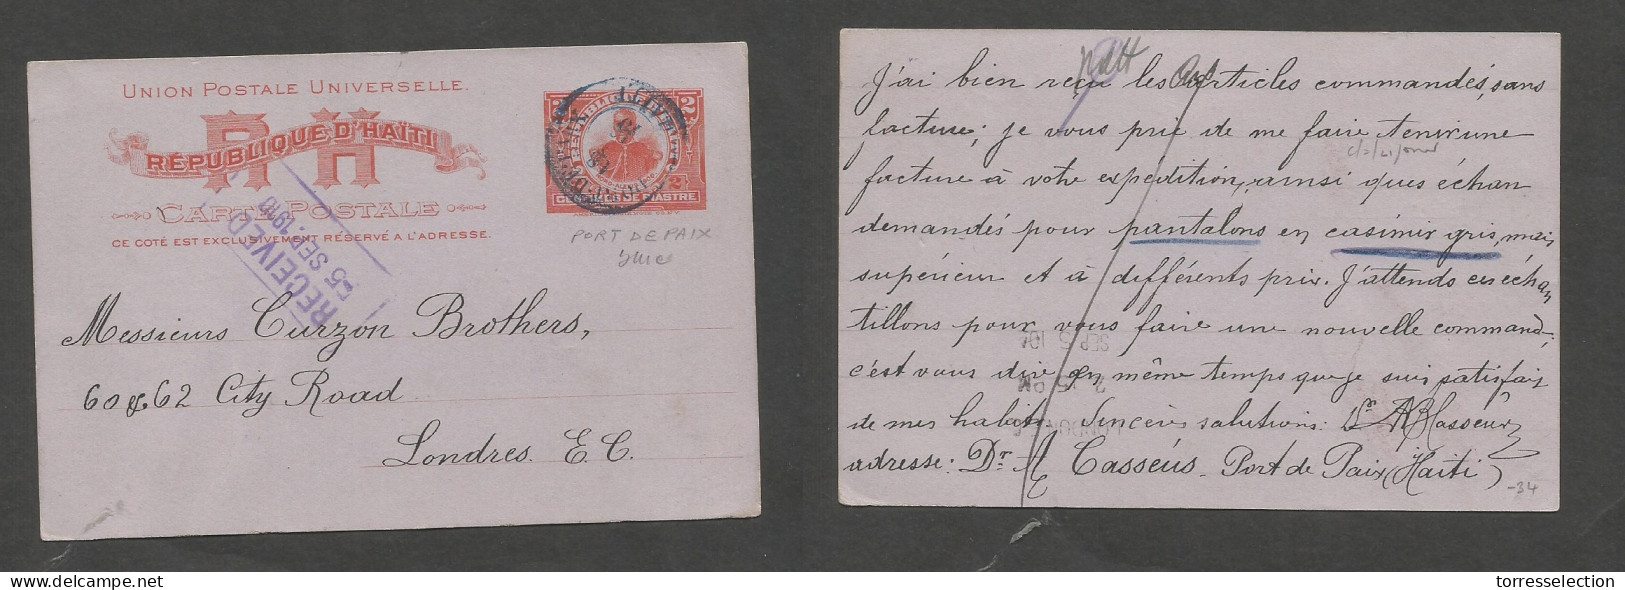 HAITI. 1910 (18 Aug) Port Paix - London, UK (5 Sept) 2c Red Stat Card. Fine Used. Arrival Cachet. SALE. - Haïti